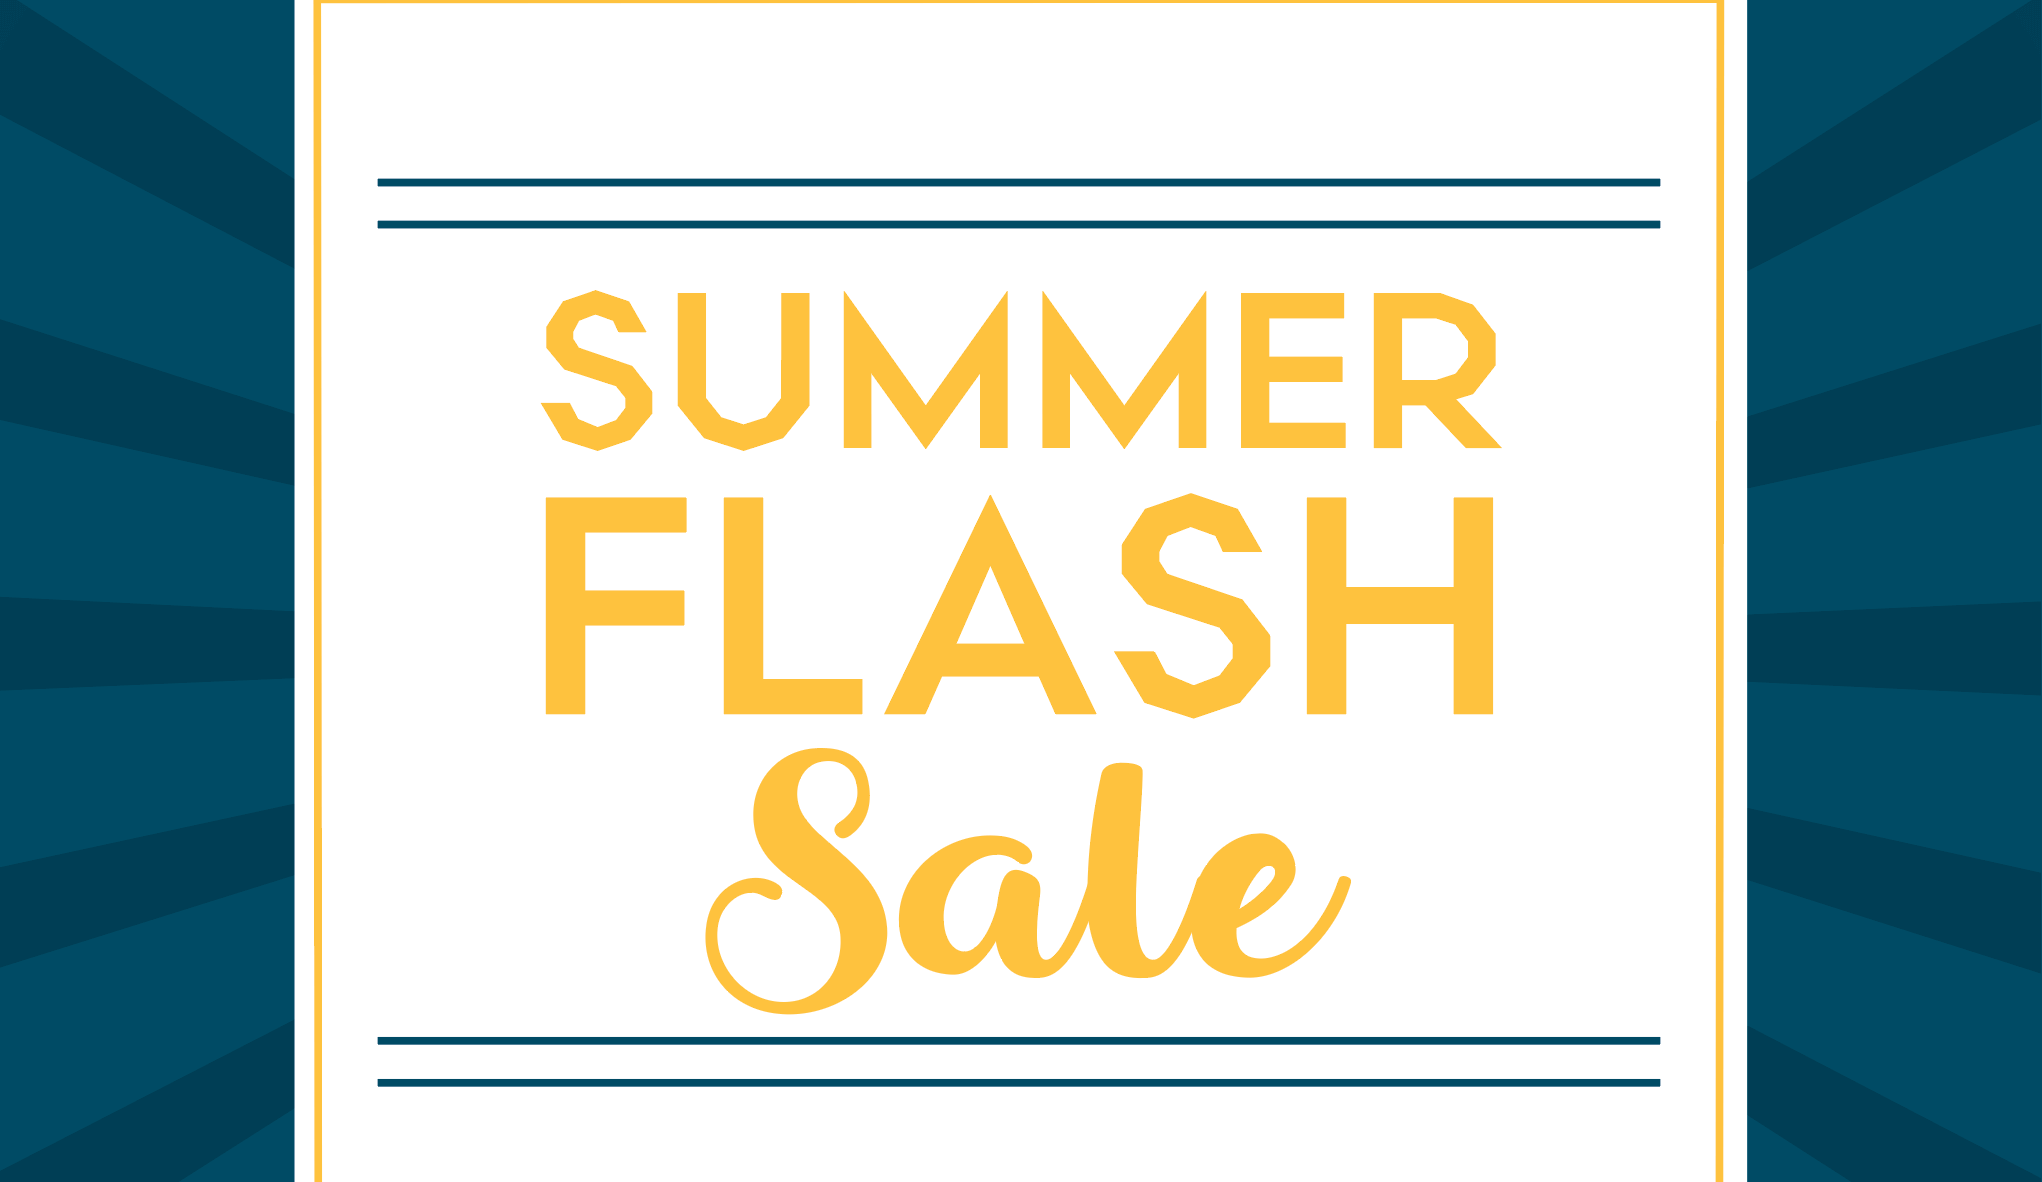 Summer Class Card Flash Sale!